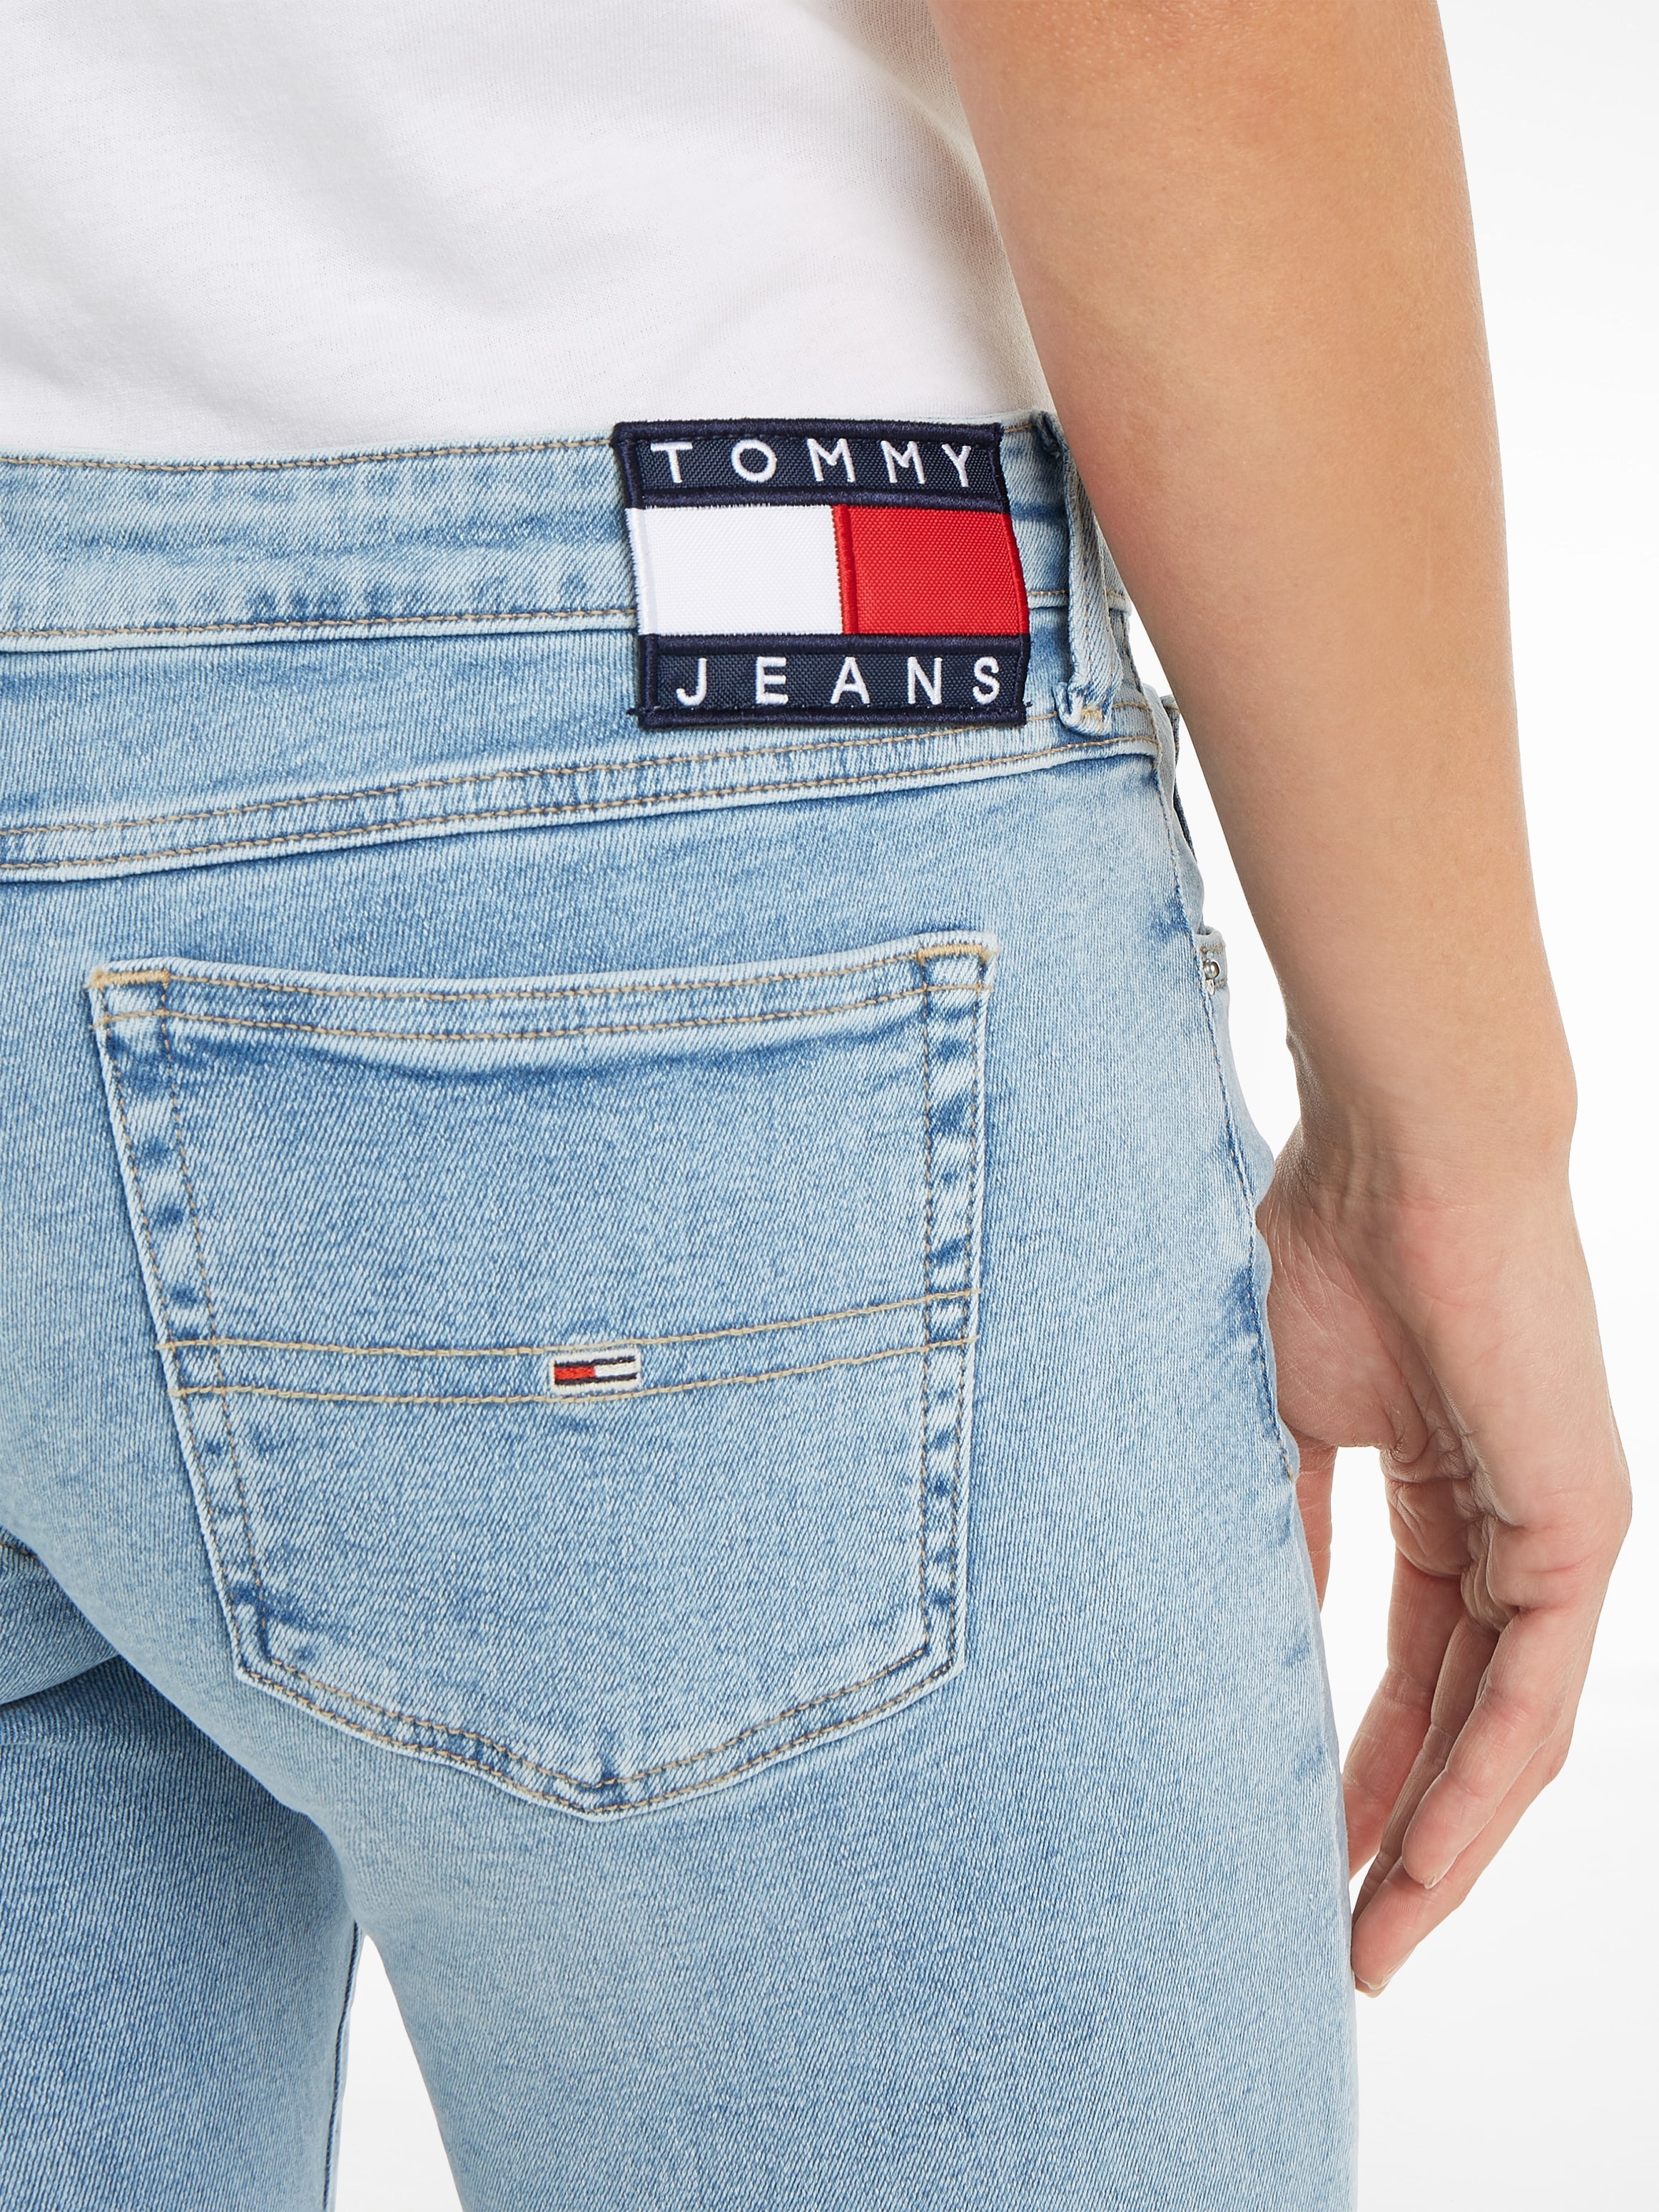 BAUR mit Labelapplikationen dezenten Skinny-fit-Jeans, Jeans bestellen Tommy |